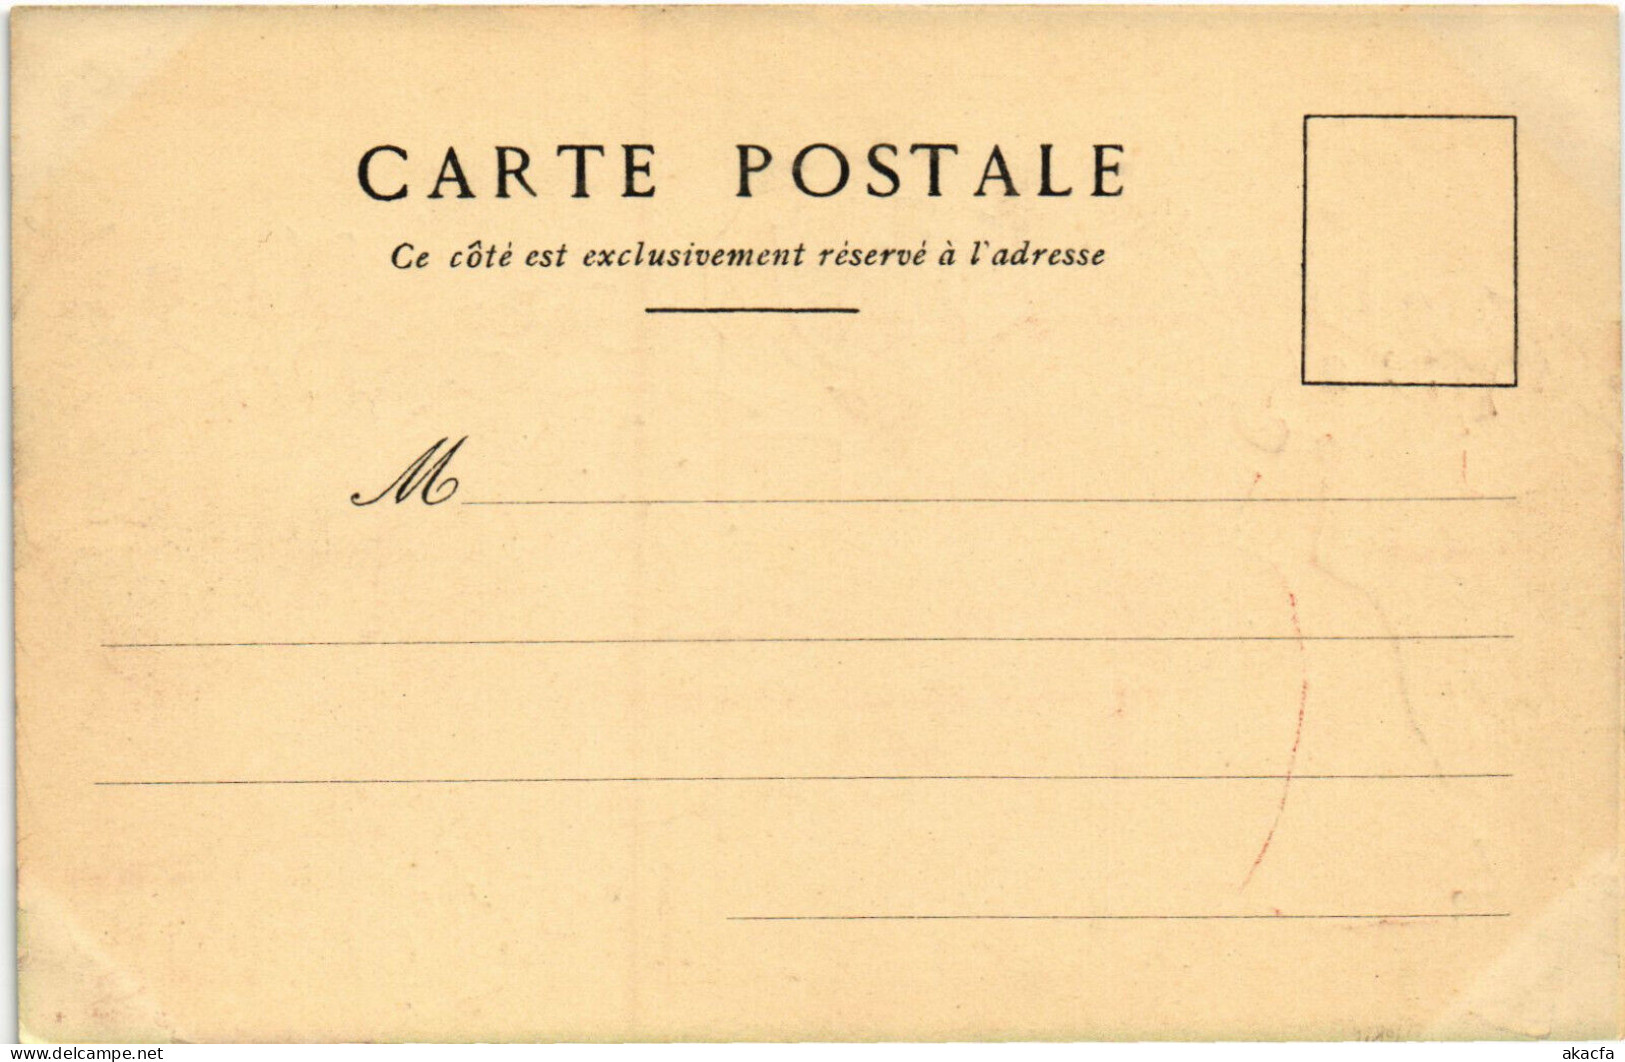 PC ARTIST SIGNED, MORIN, HORSE RACE, Vintage Postcard (b51900) - Morin, Henri